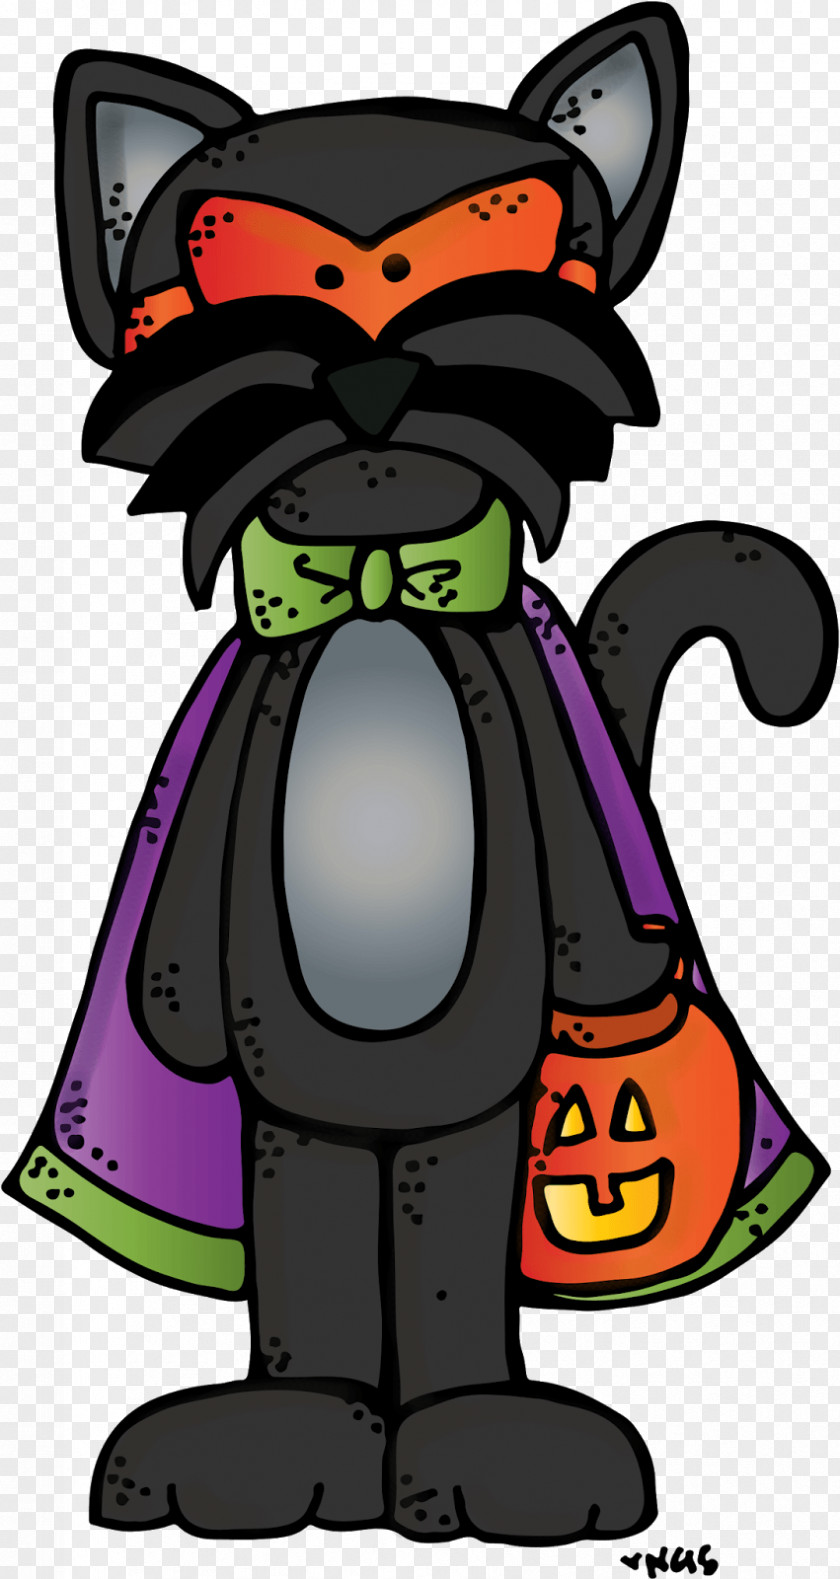 Halloween Clip Art Trick-or-treating Illustration Jack-o'-lantern PNG